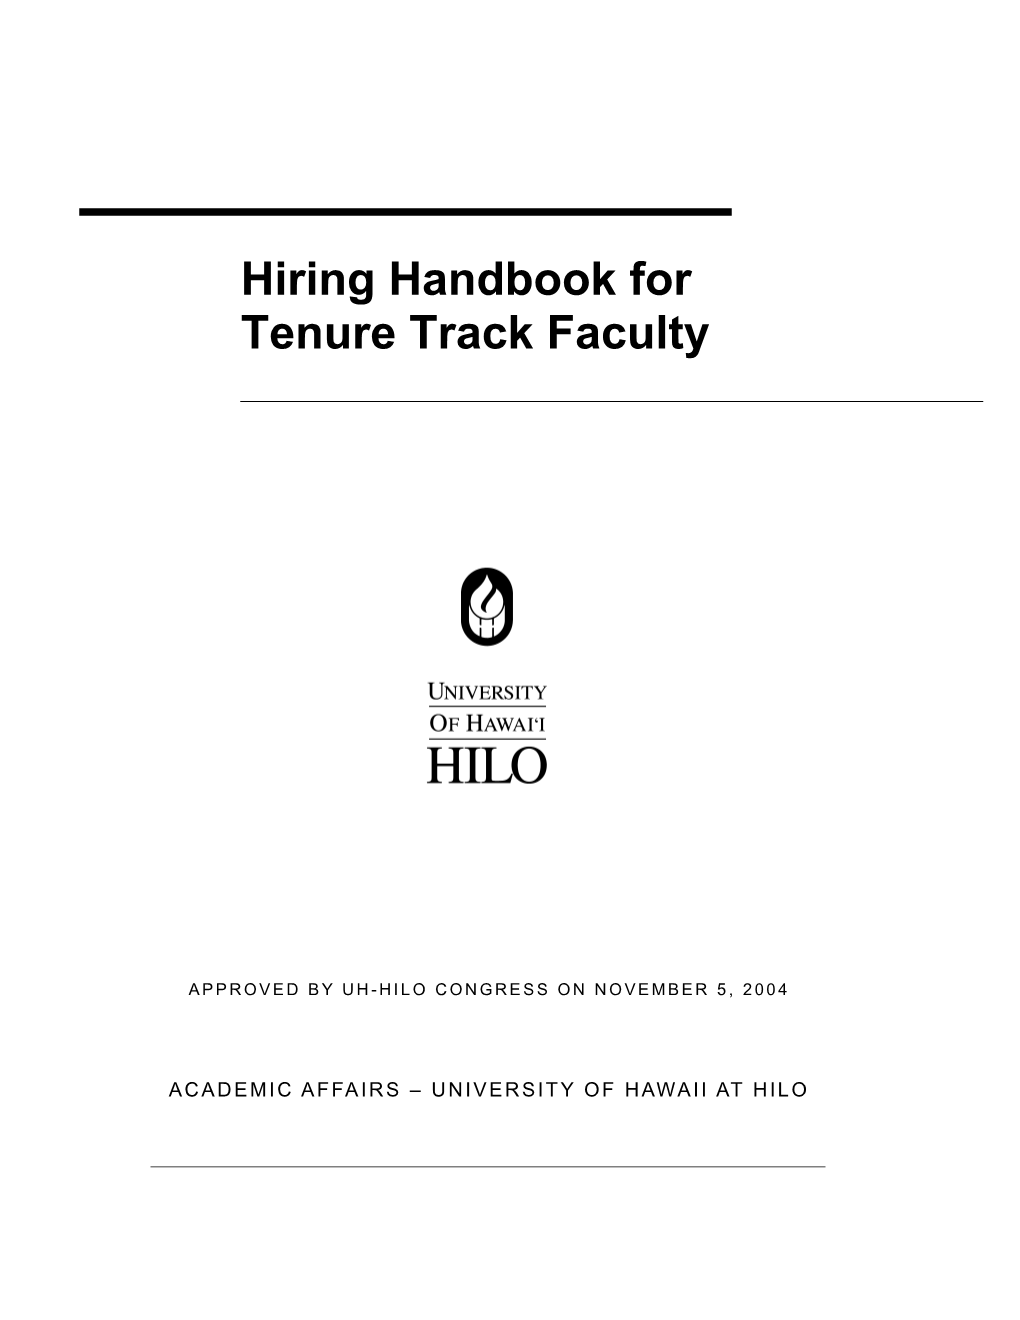 Teaching Faculty Hiring Handbook